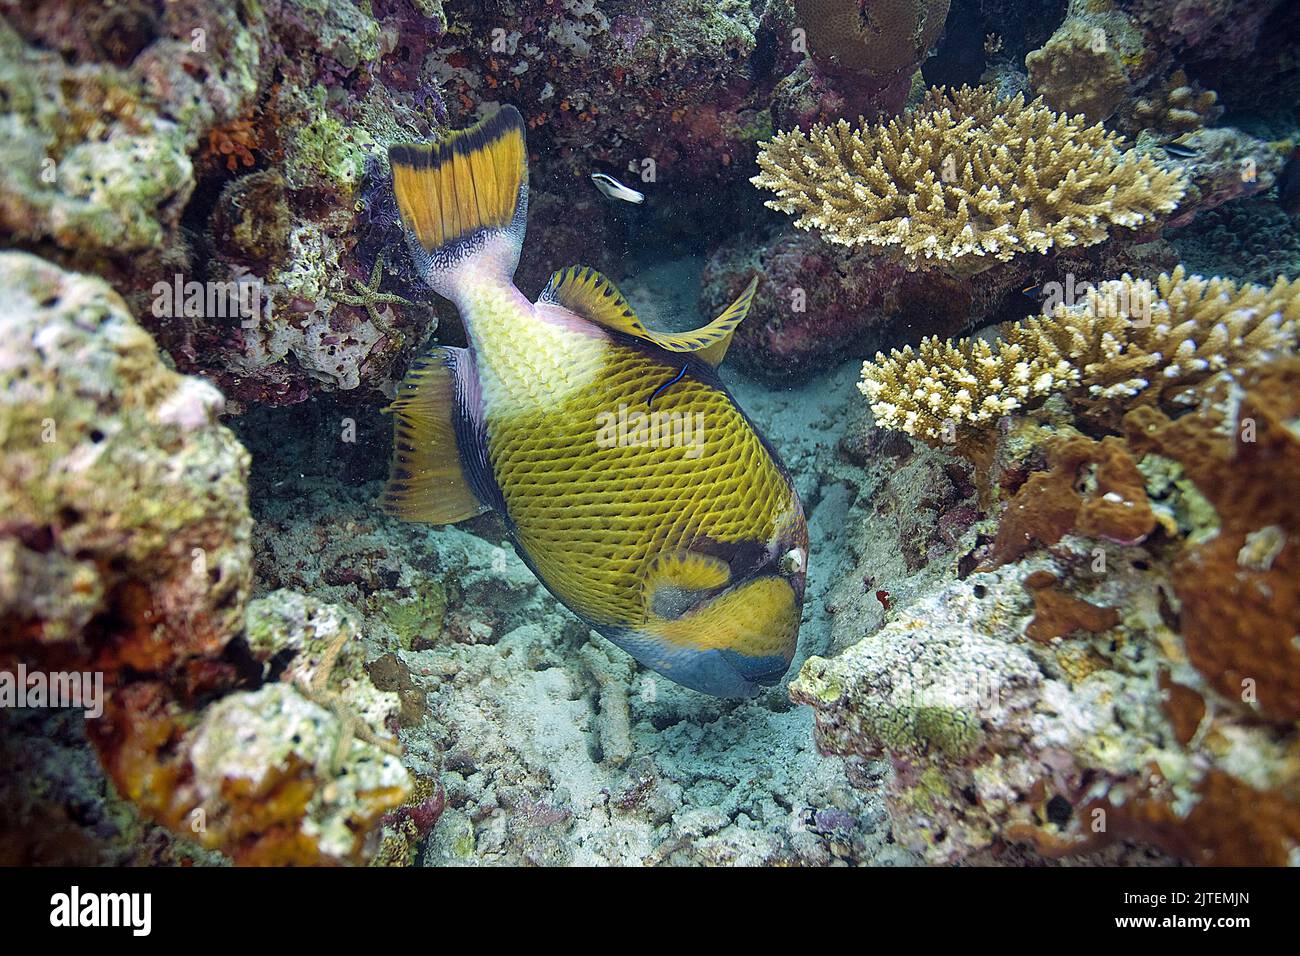 Pez triggerfish gigante o pez triggerfish Titán (Balistoides viridescens), alimentando corales, Atolón Male Sur, Maldivas, Océano Índico, Asia Foto de stock